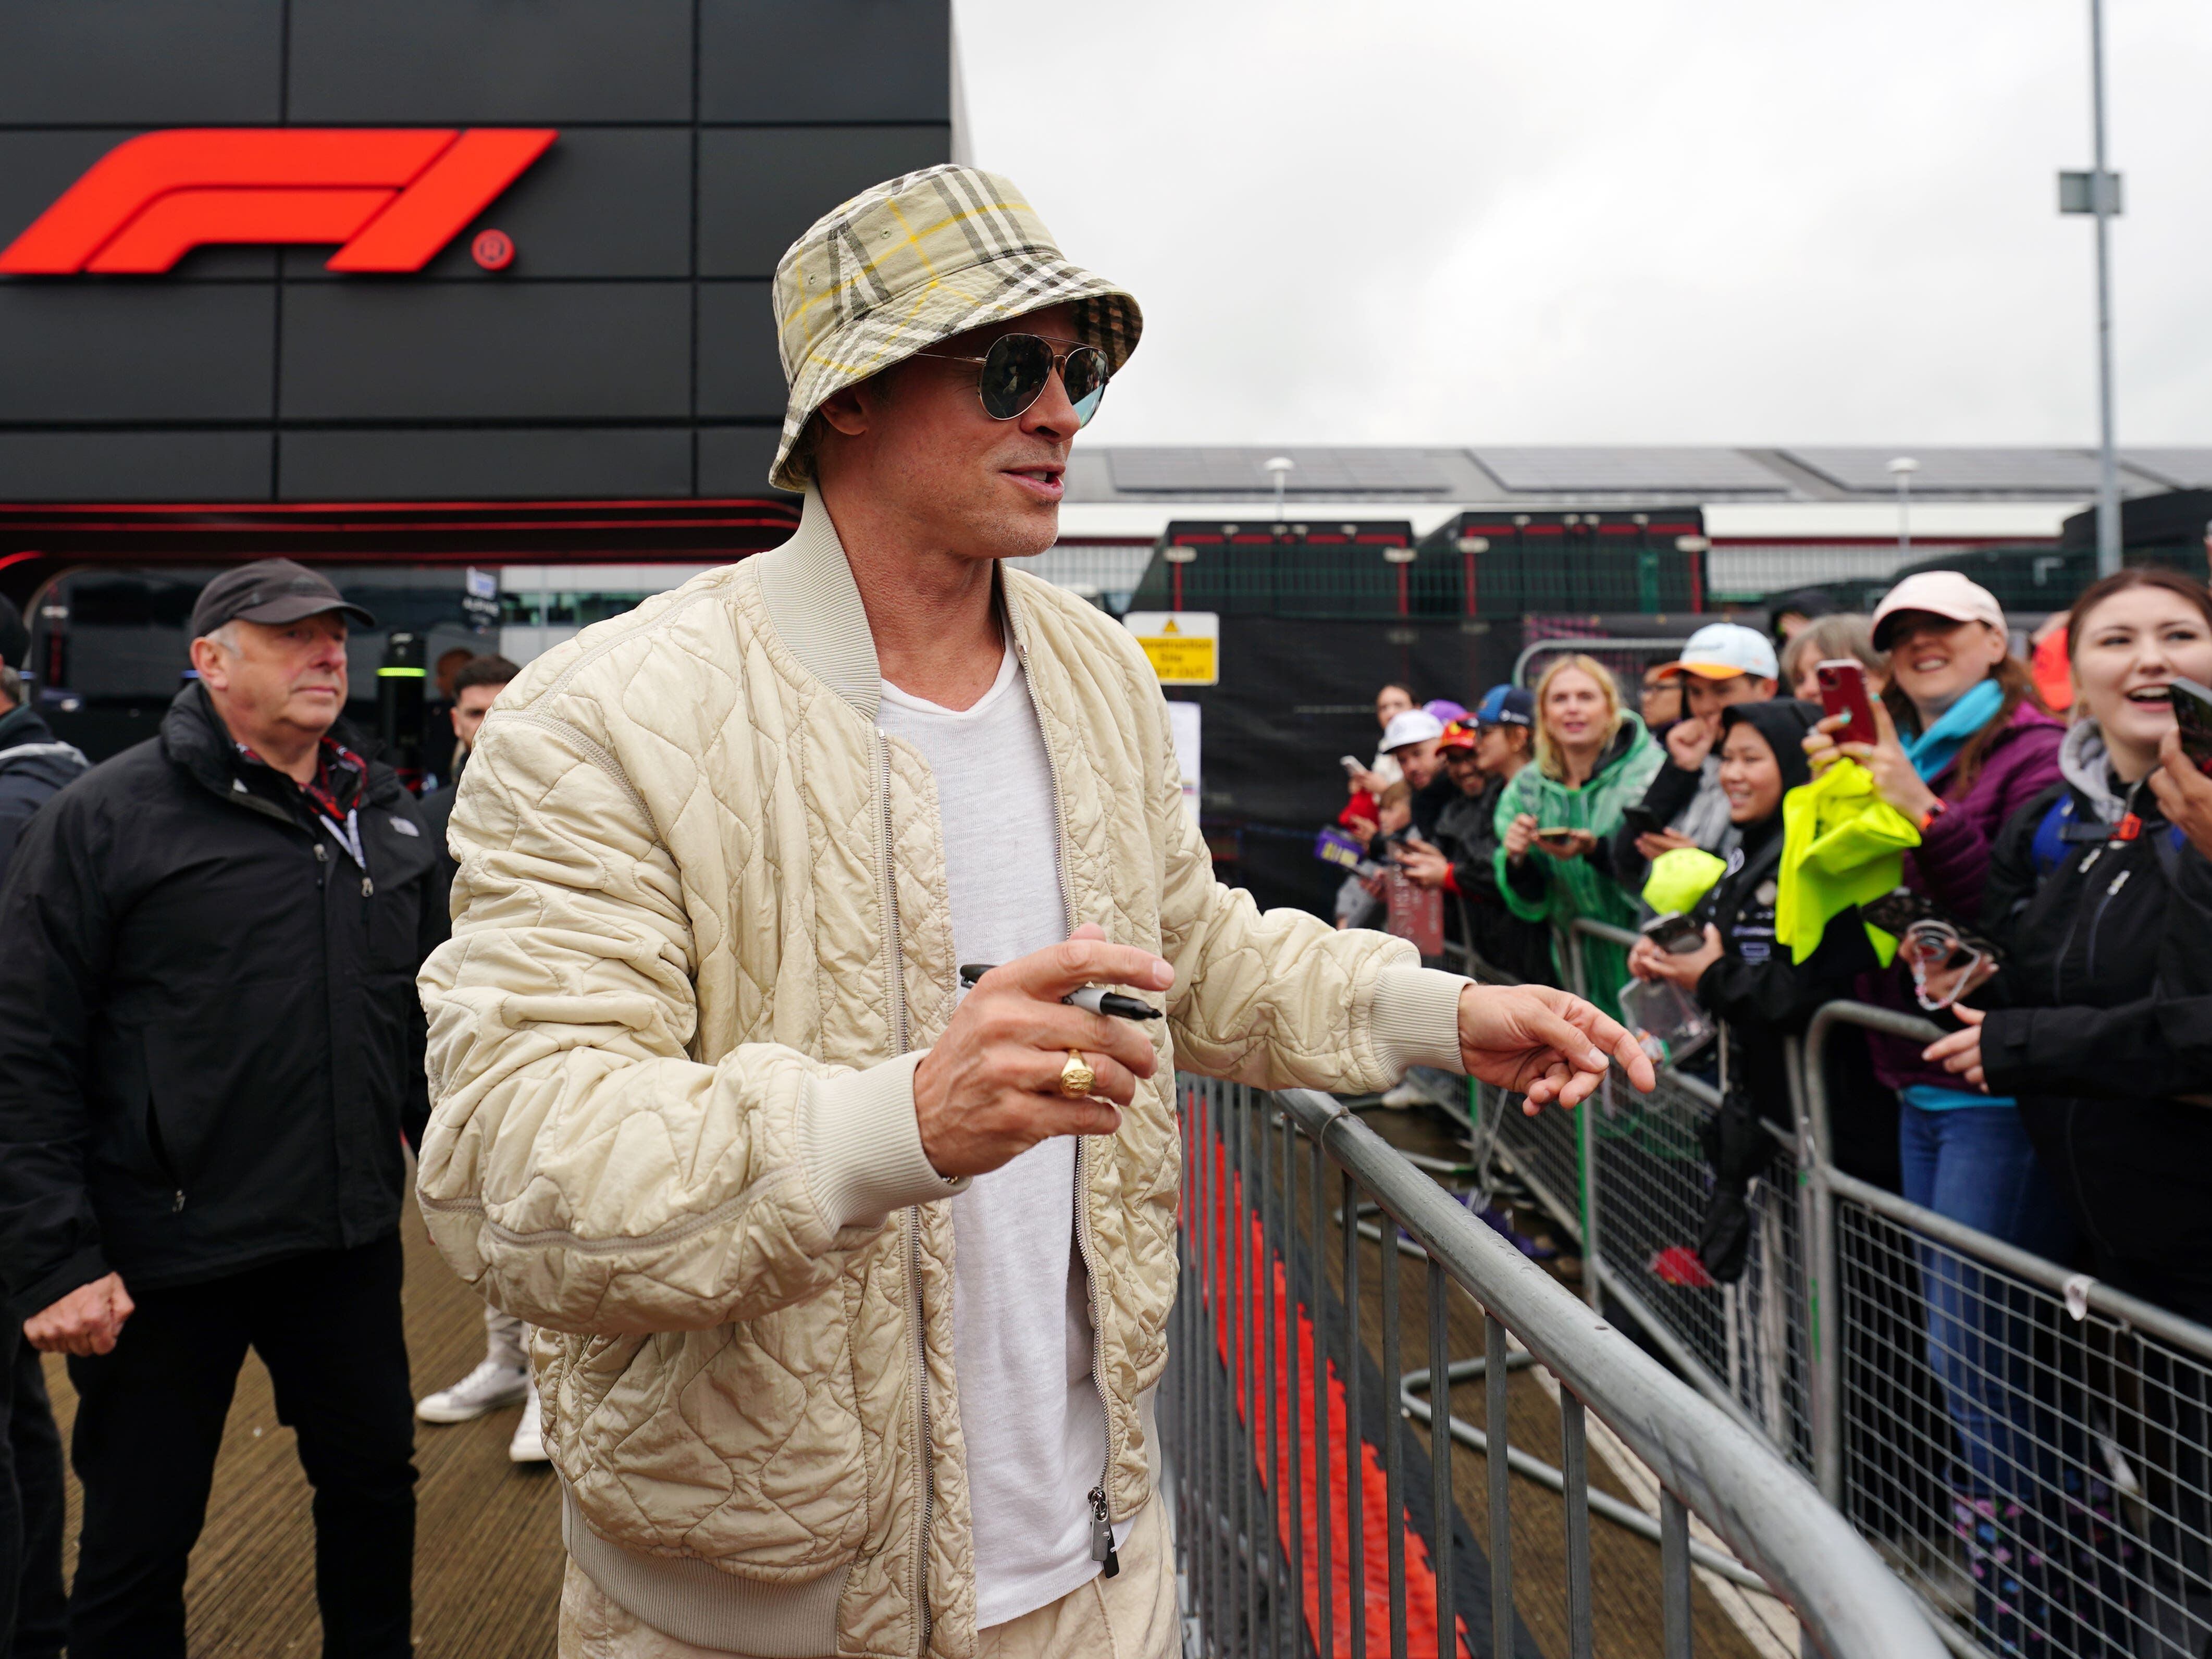 Brad Pitt brings star power to Silverstone ahead of British Grand Prix